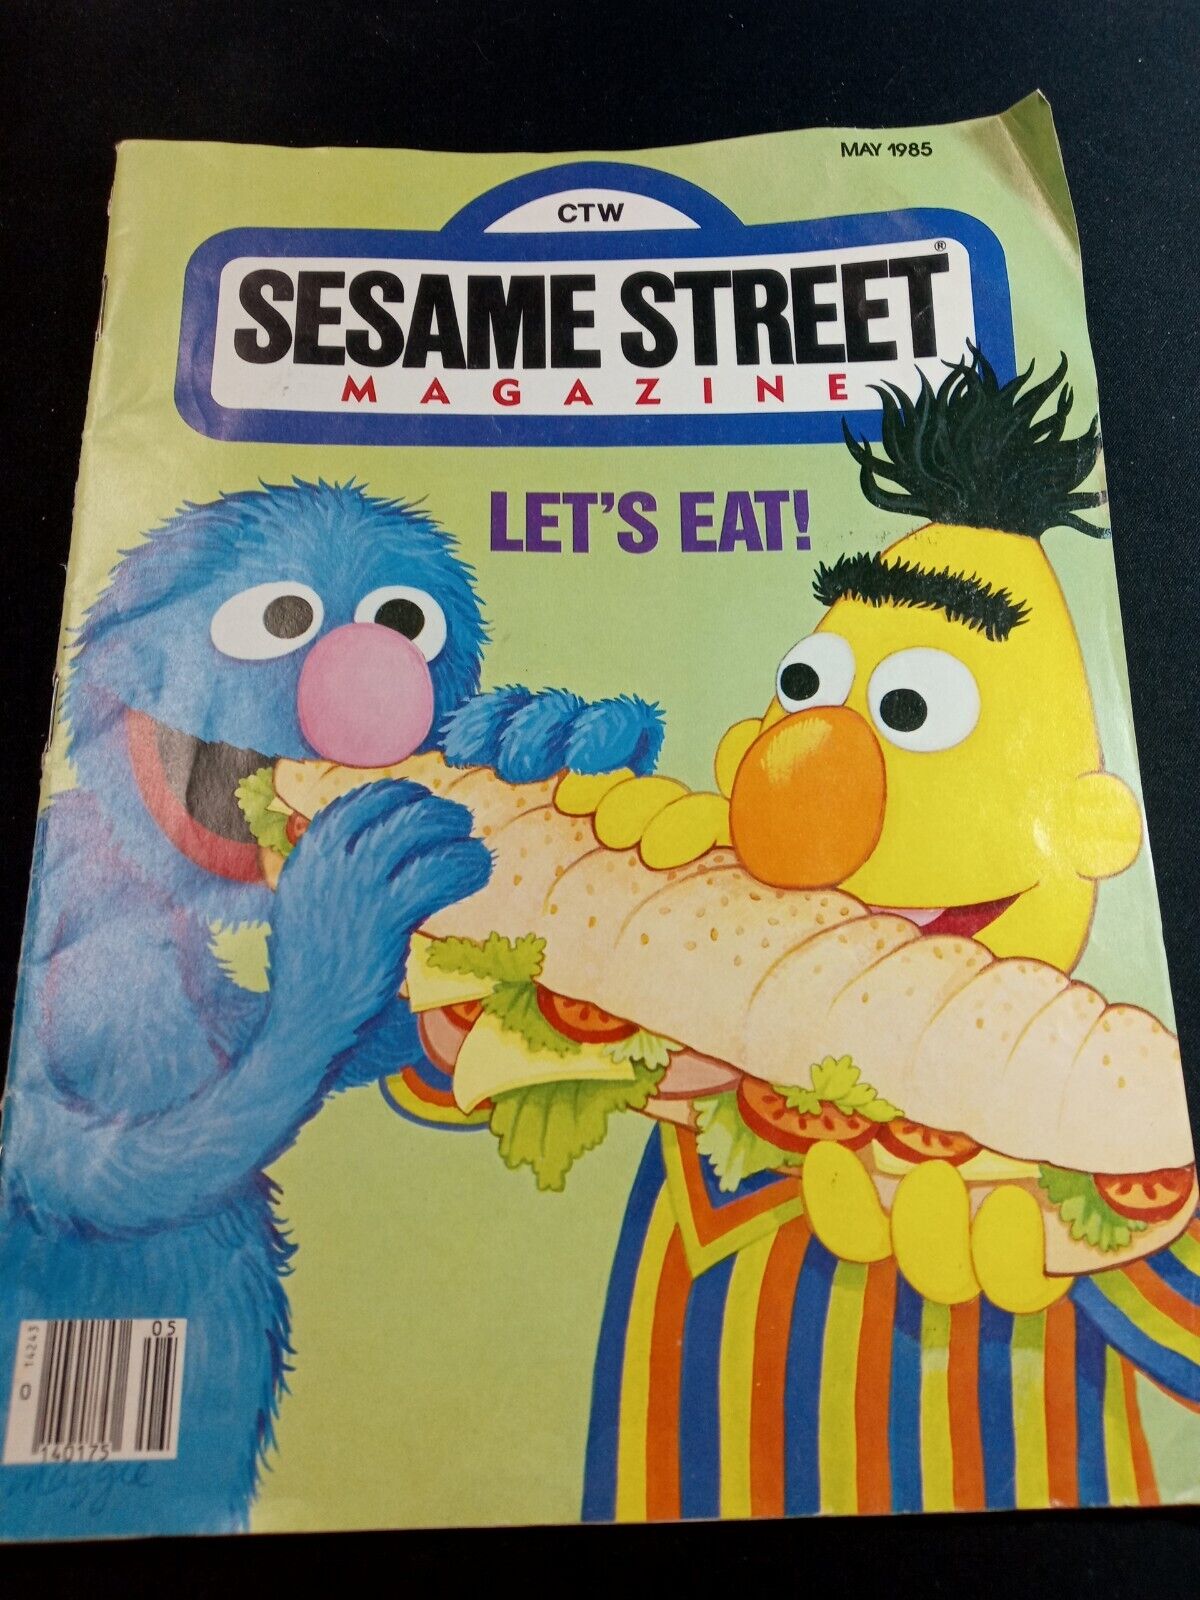 Vintage-Your Choice Original Sesame Street Magazines 1985 & 1986 Versions